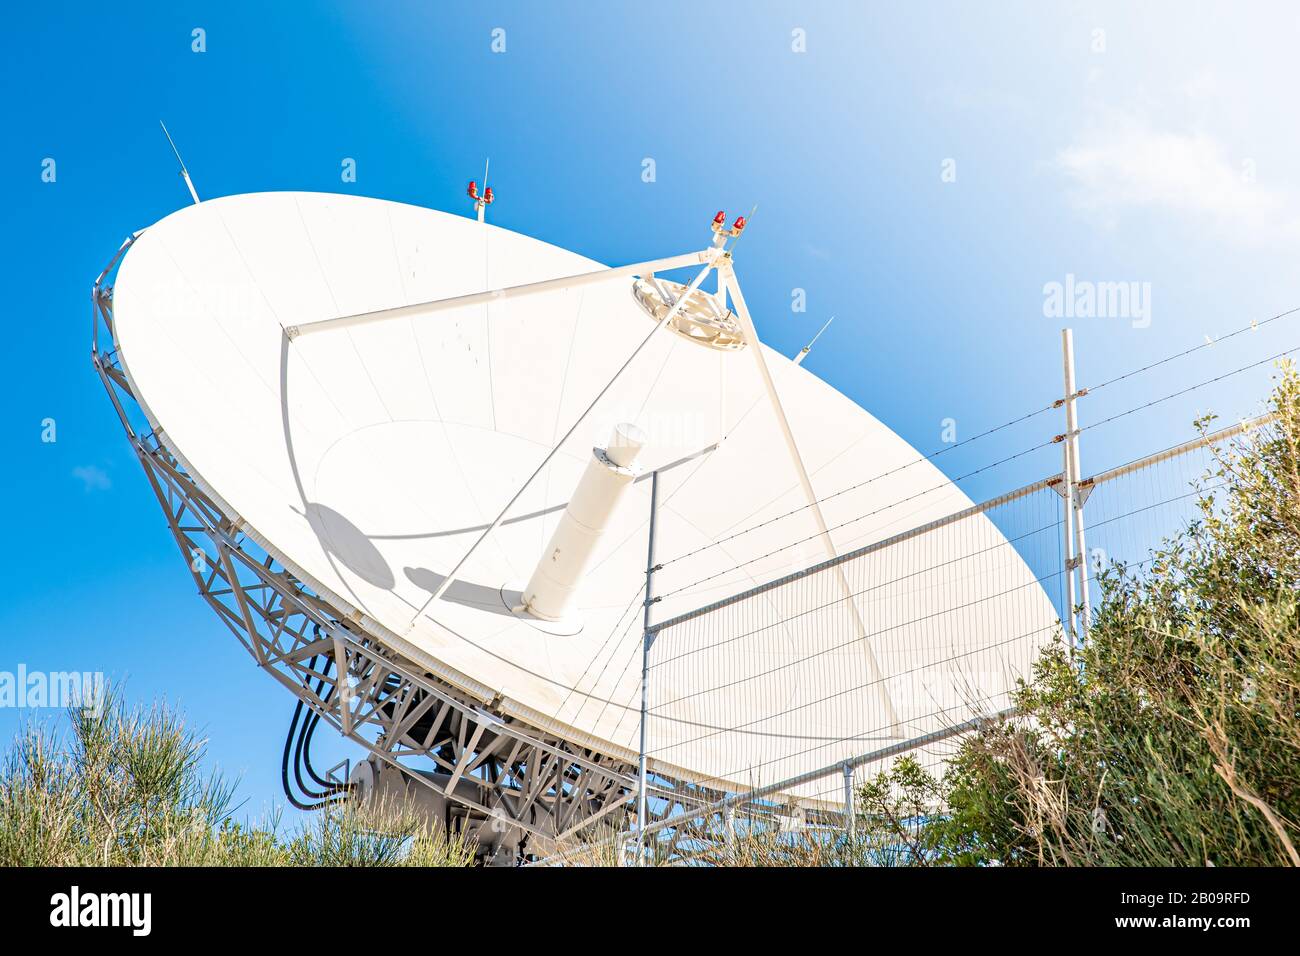 satellite antenna for receiving and transmitting information in electromagnetic waves via satellites in orbit Stock Photo